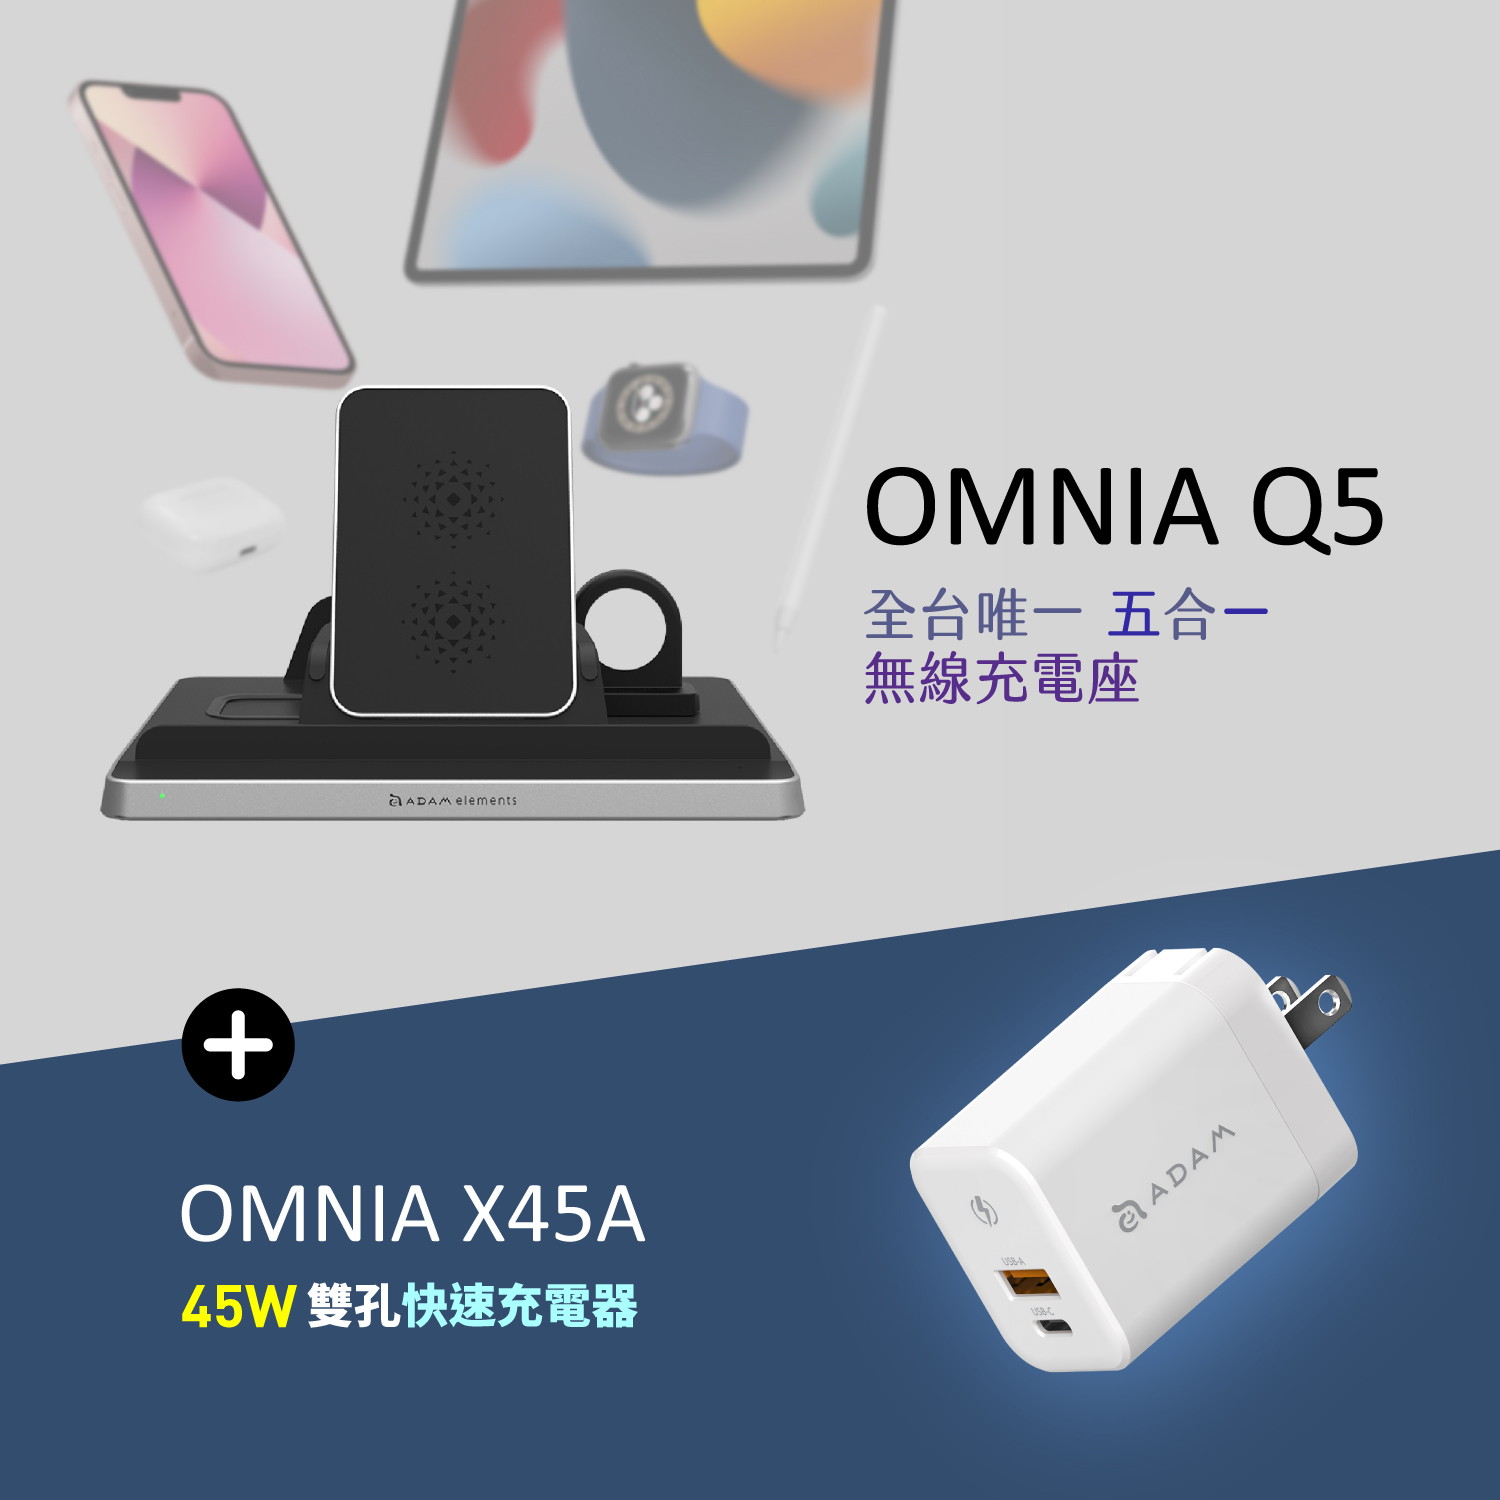 OMNIA Q5 五合一無線充電座_OMNIA X45A GaN 45W 雙孔迷你快速電源供應器